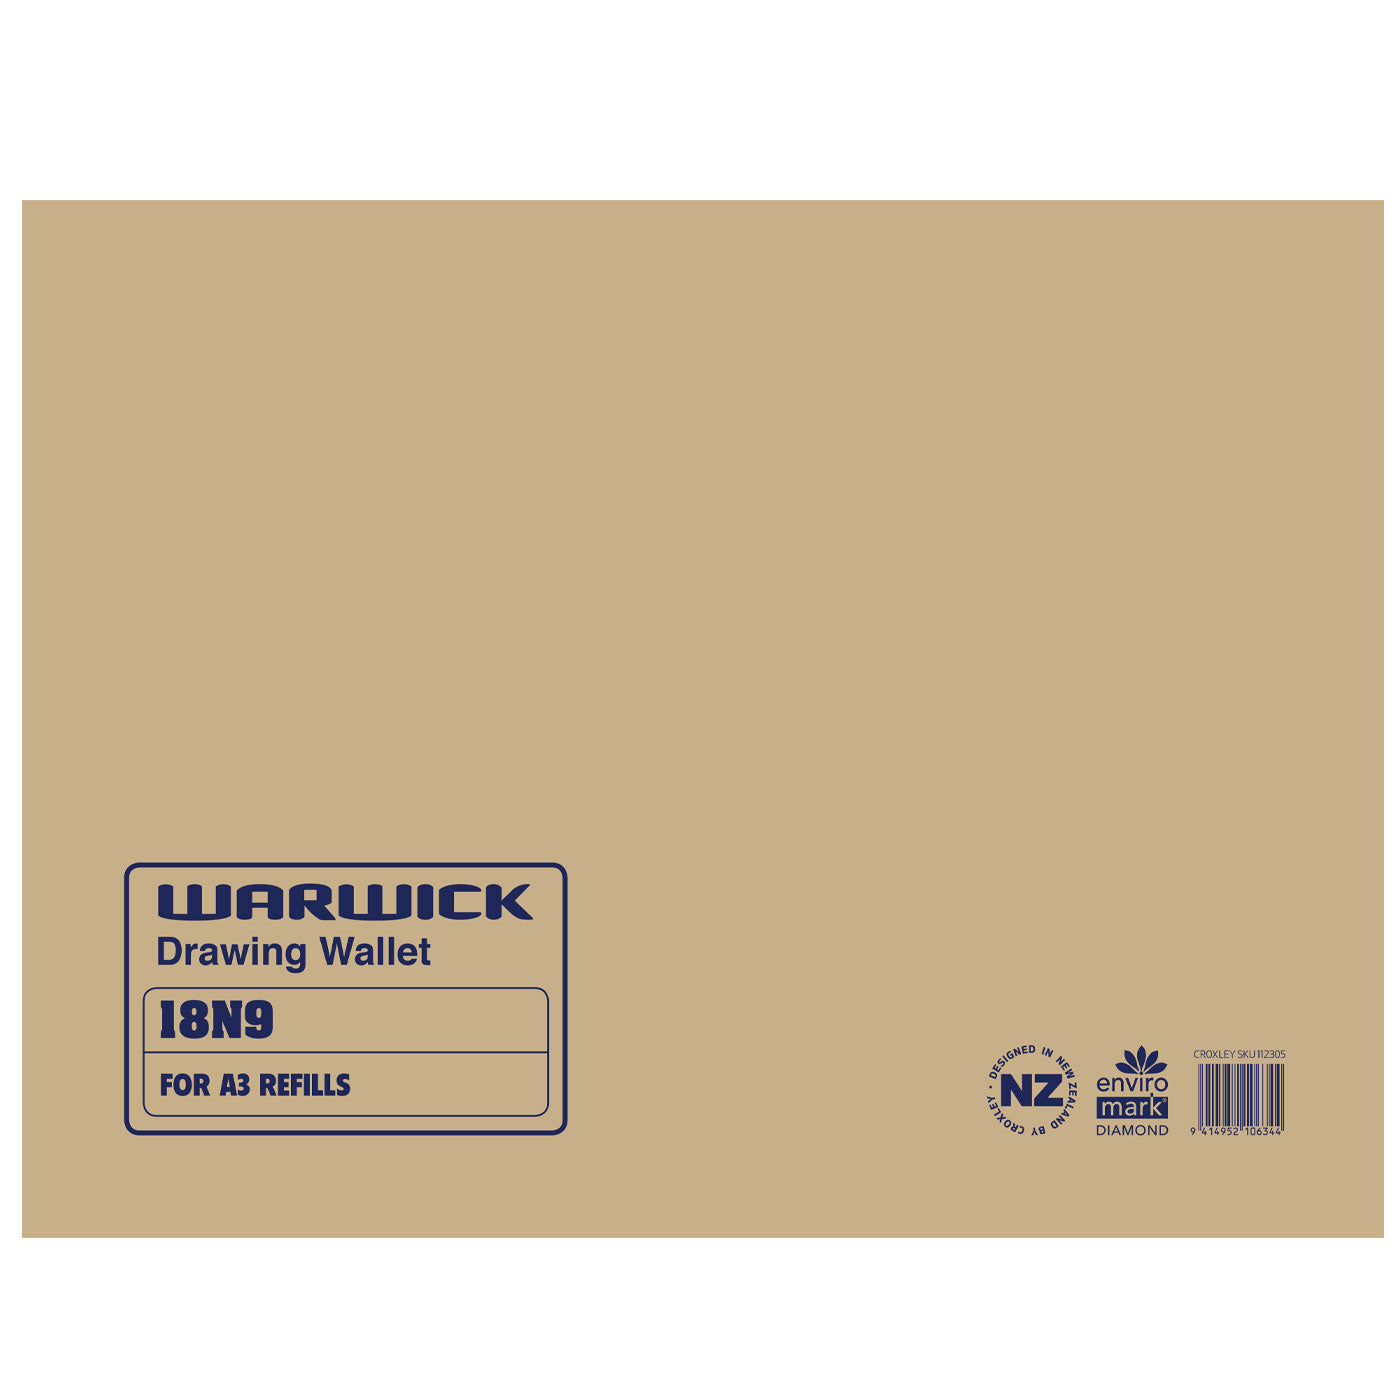 WARWICK DRAWING WALLET 18N9 A3